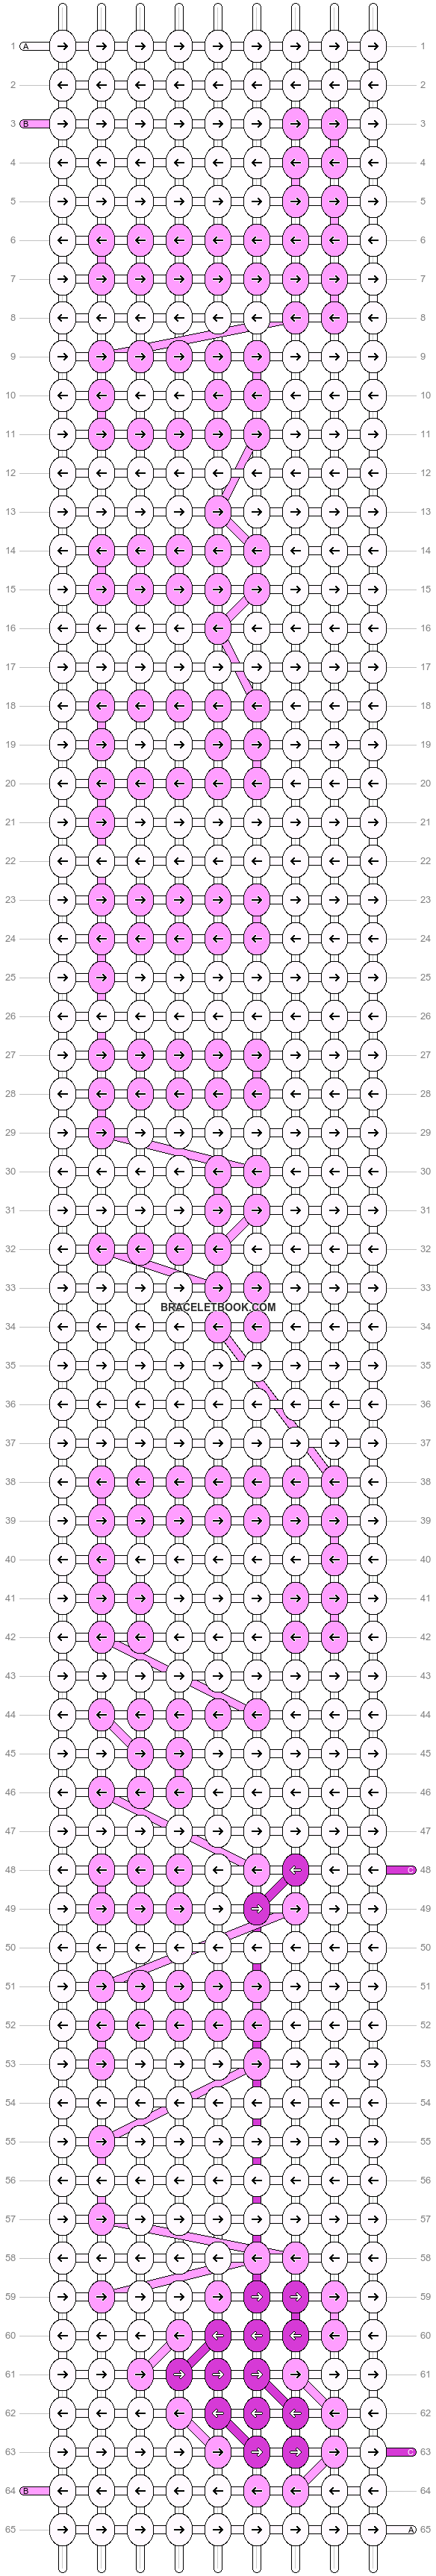 Alpha pattern #3530 pattern